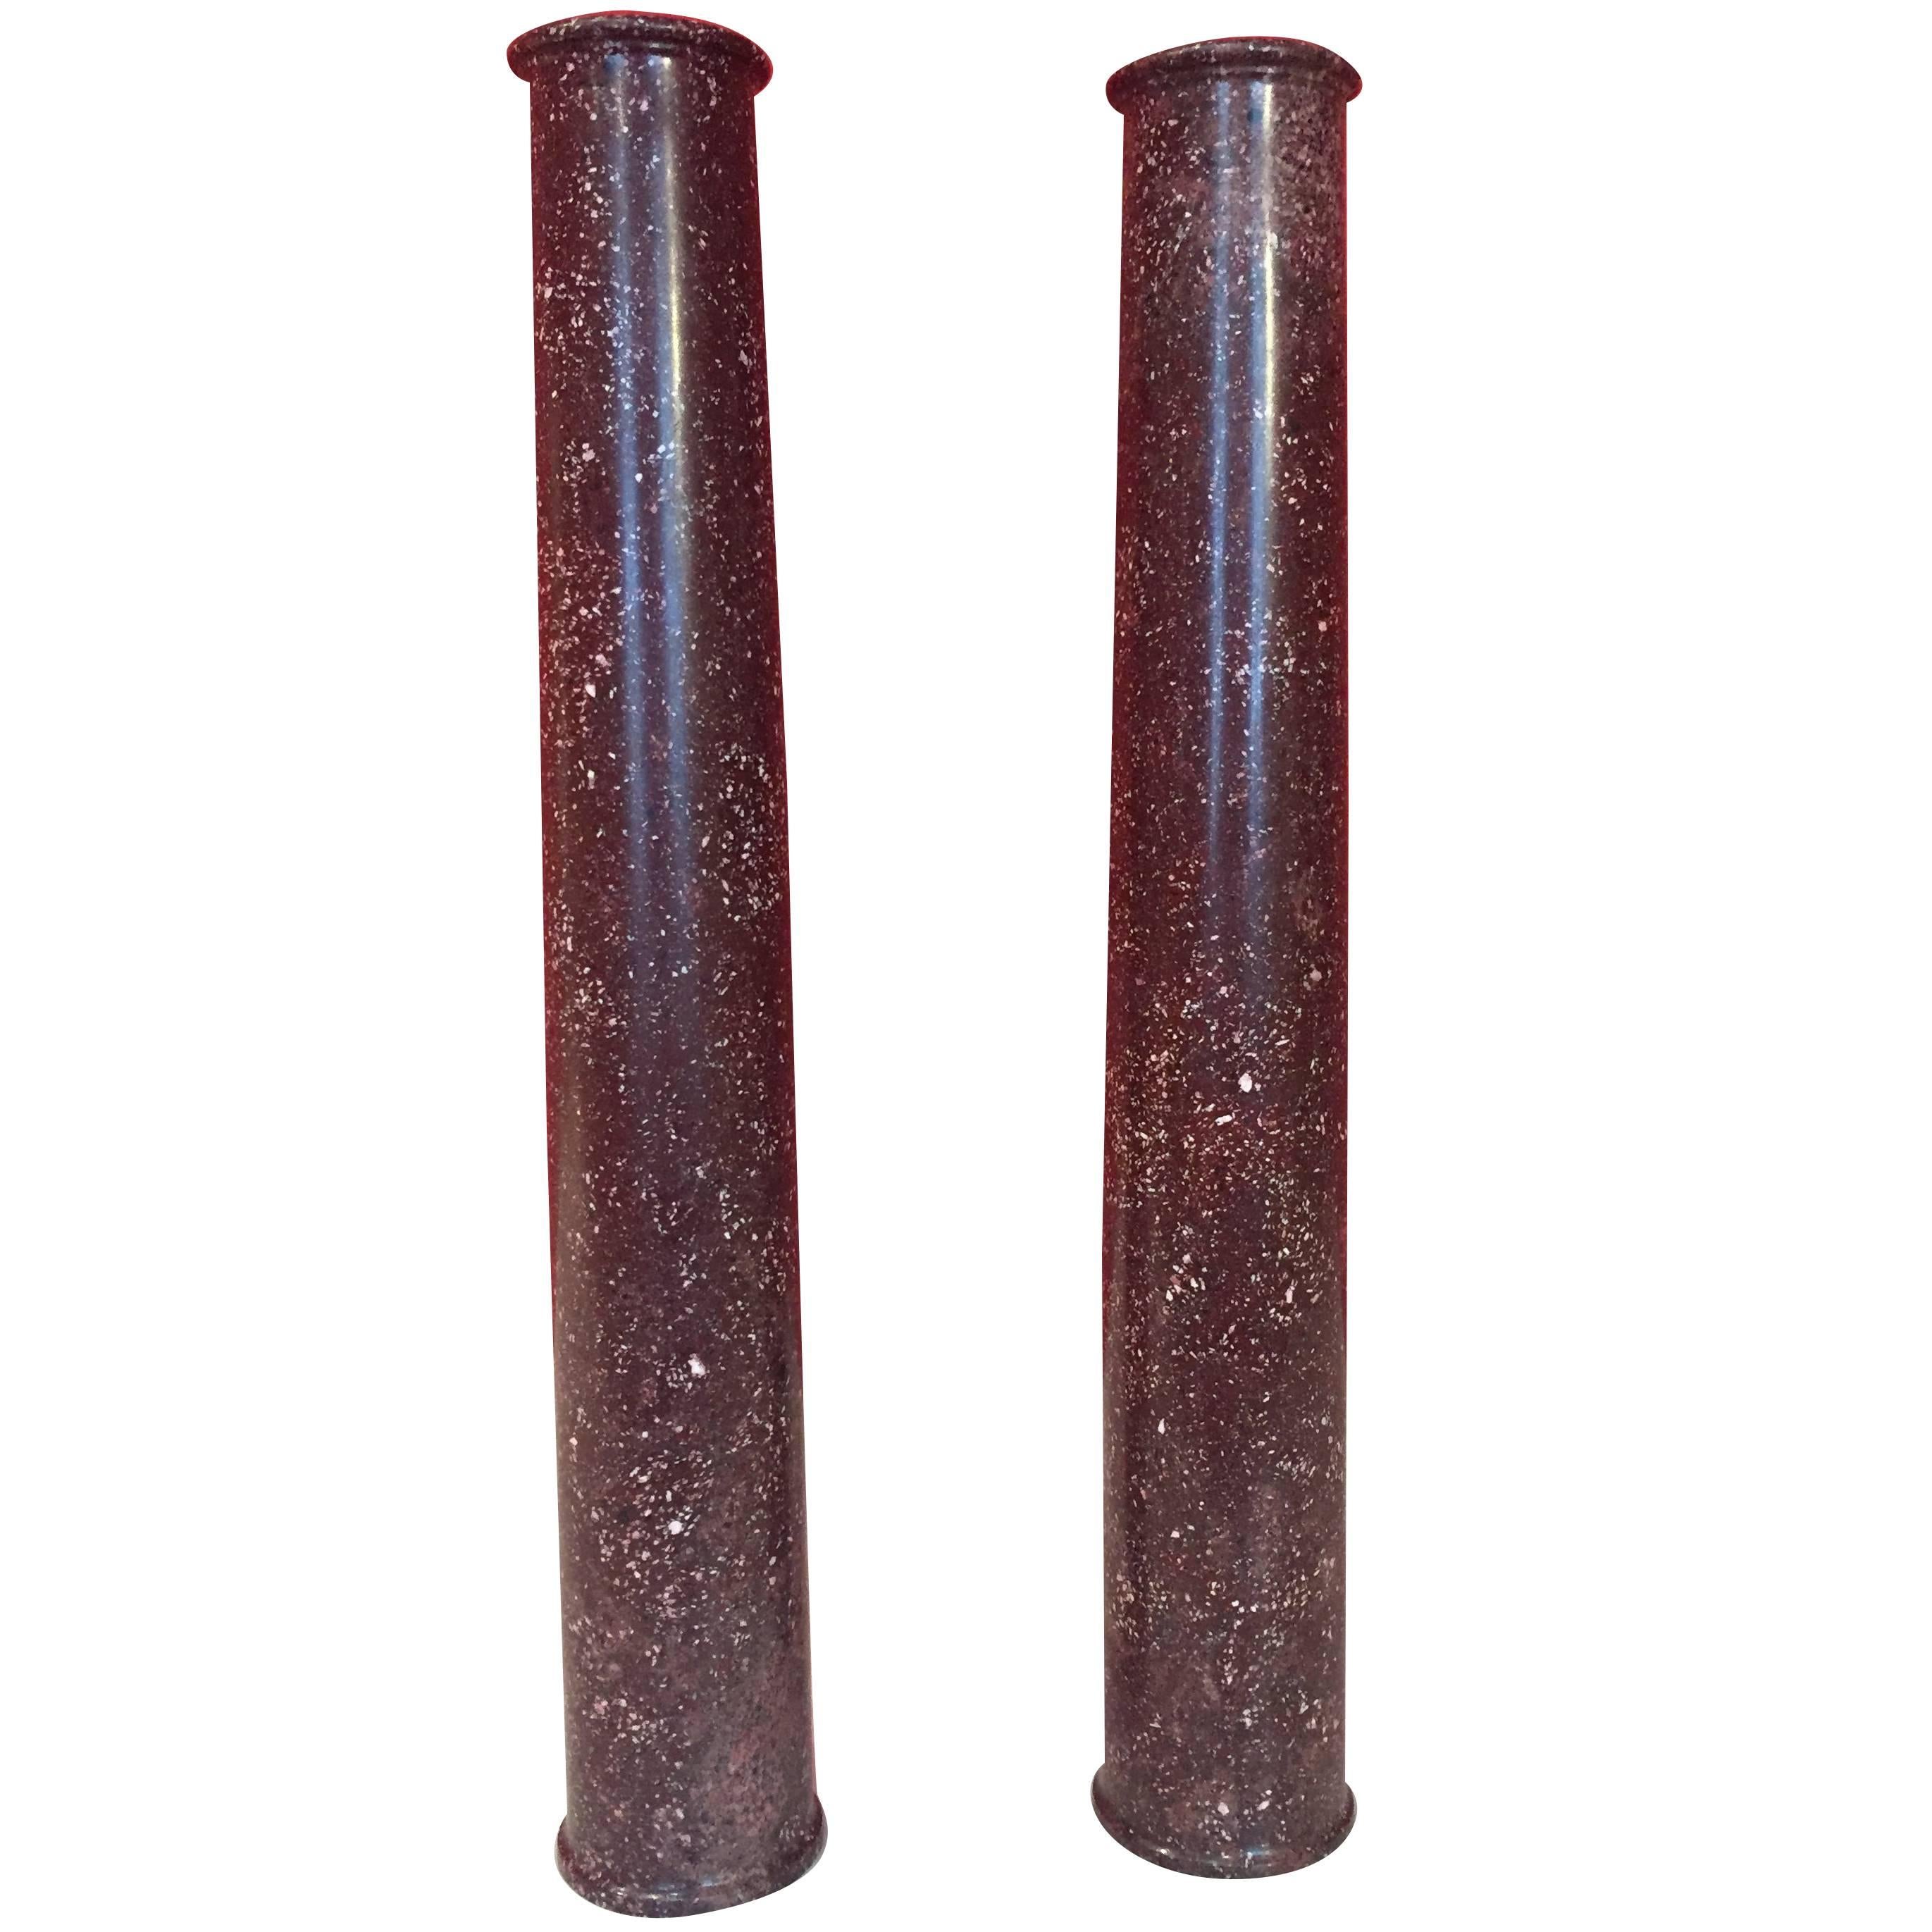 Pair of Porphyry Columns